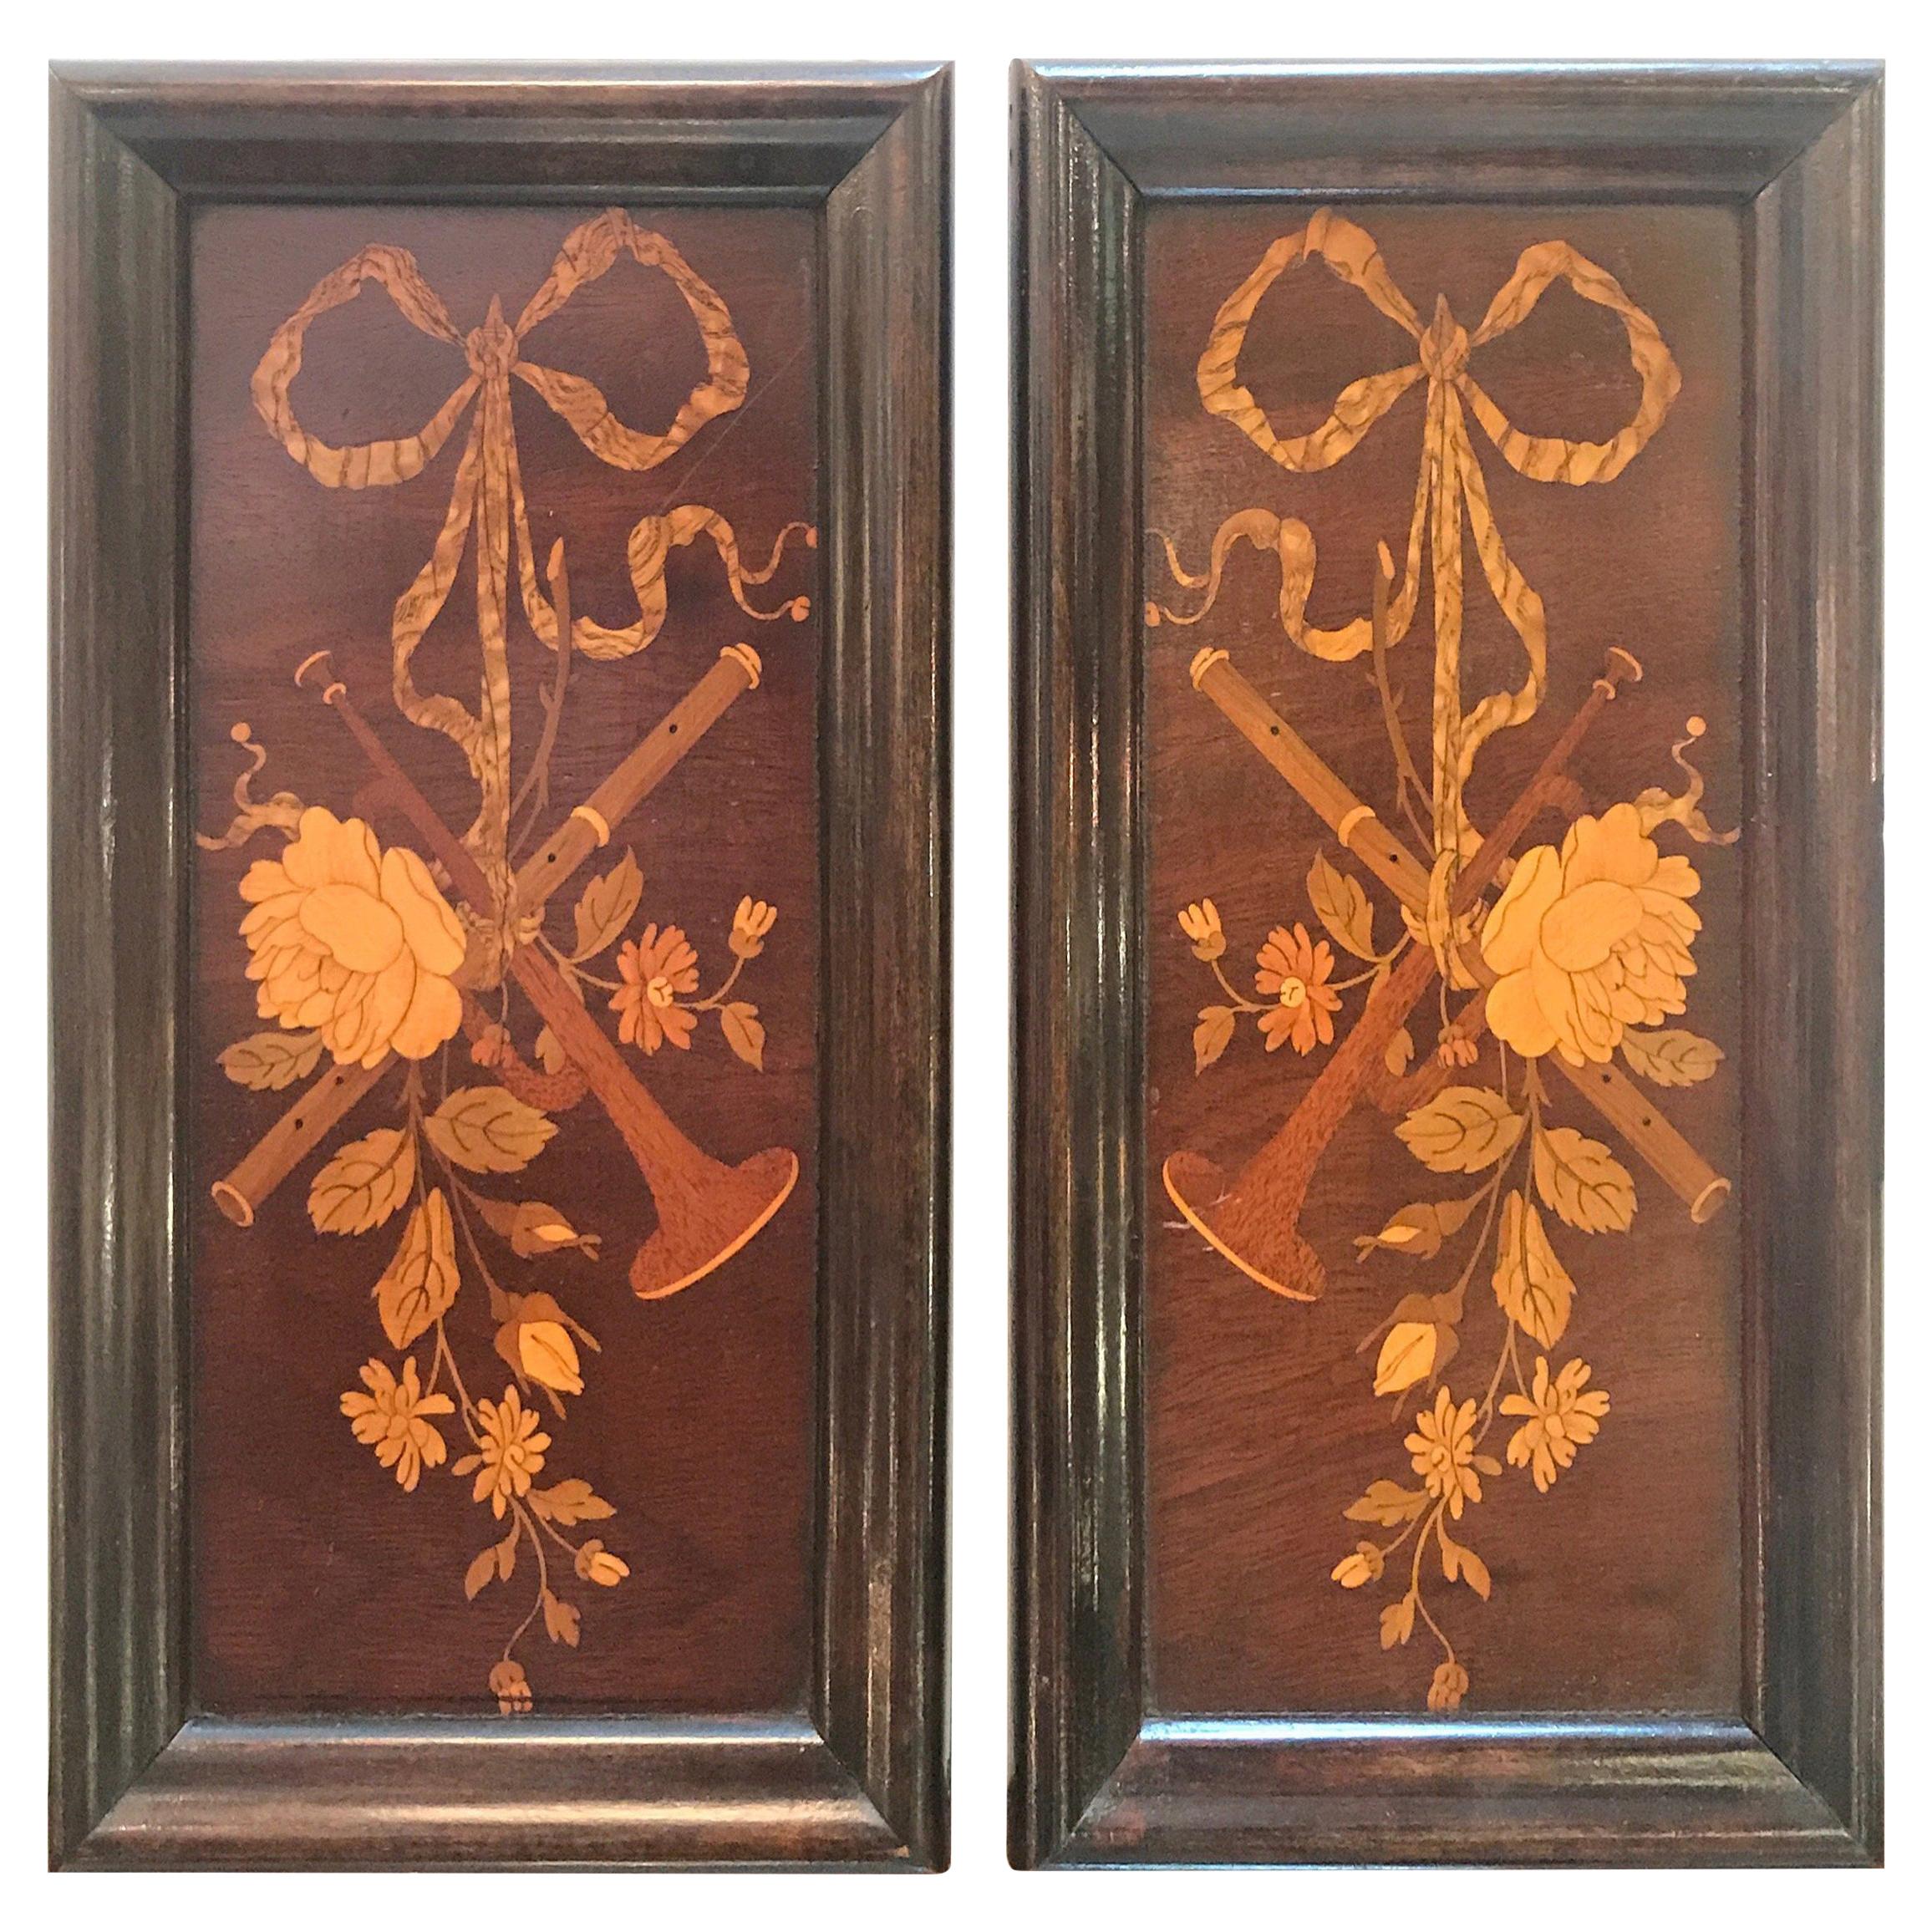 19th Century Diminutive Inlaid Wood Framed Panels